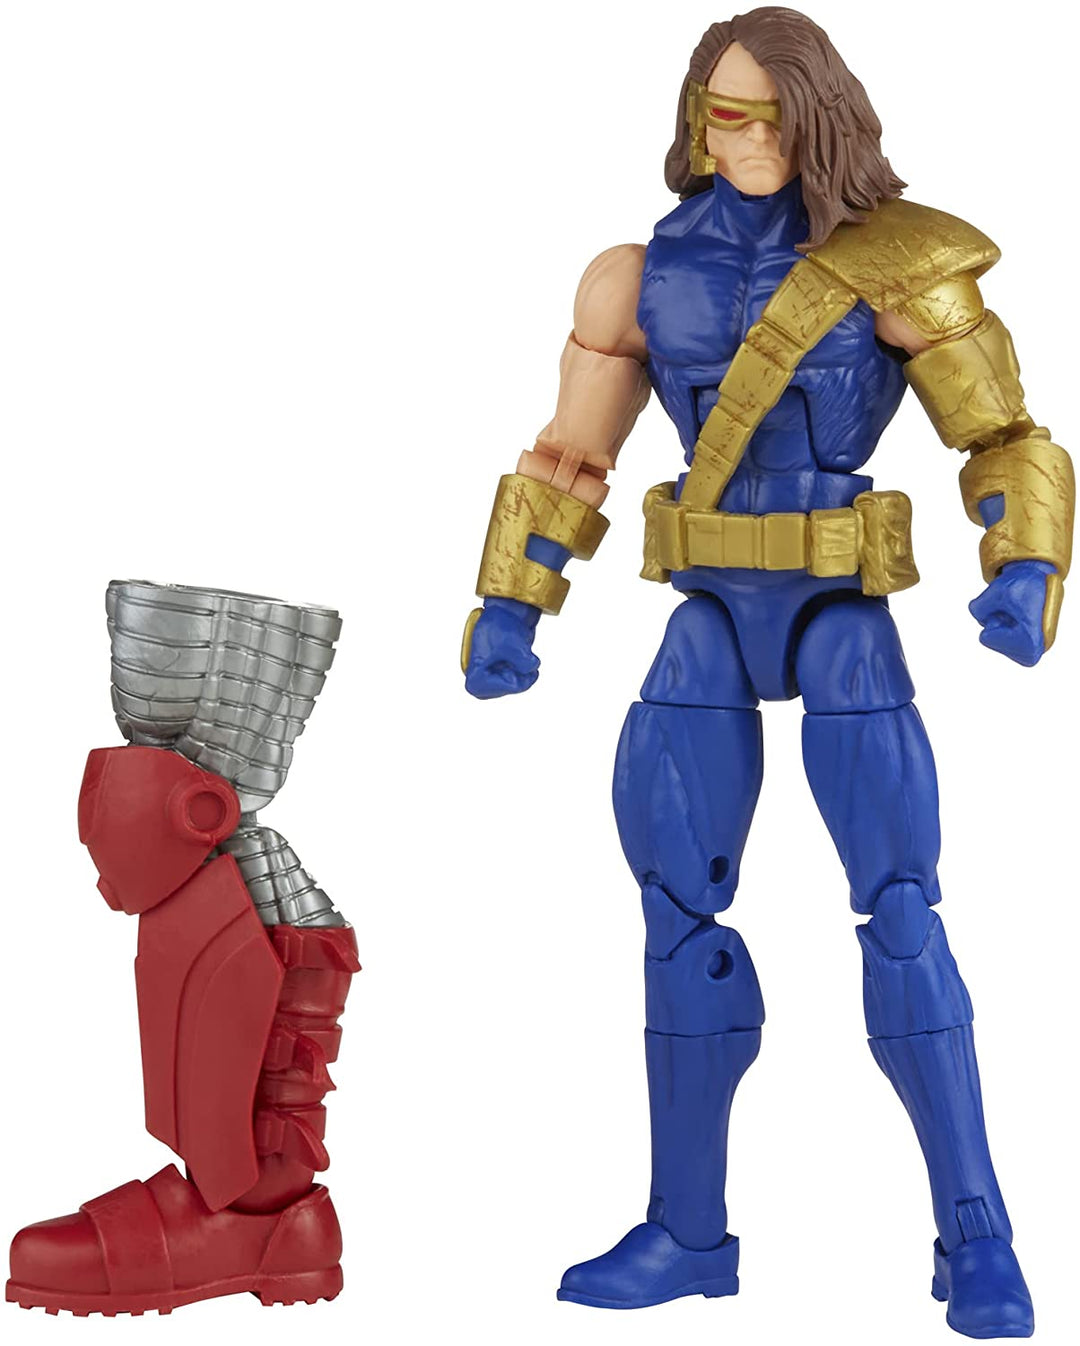 Hasbro Marvel Legends X-Men Age Of Apocalypse Cyclops Action Figure